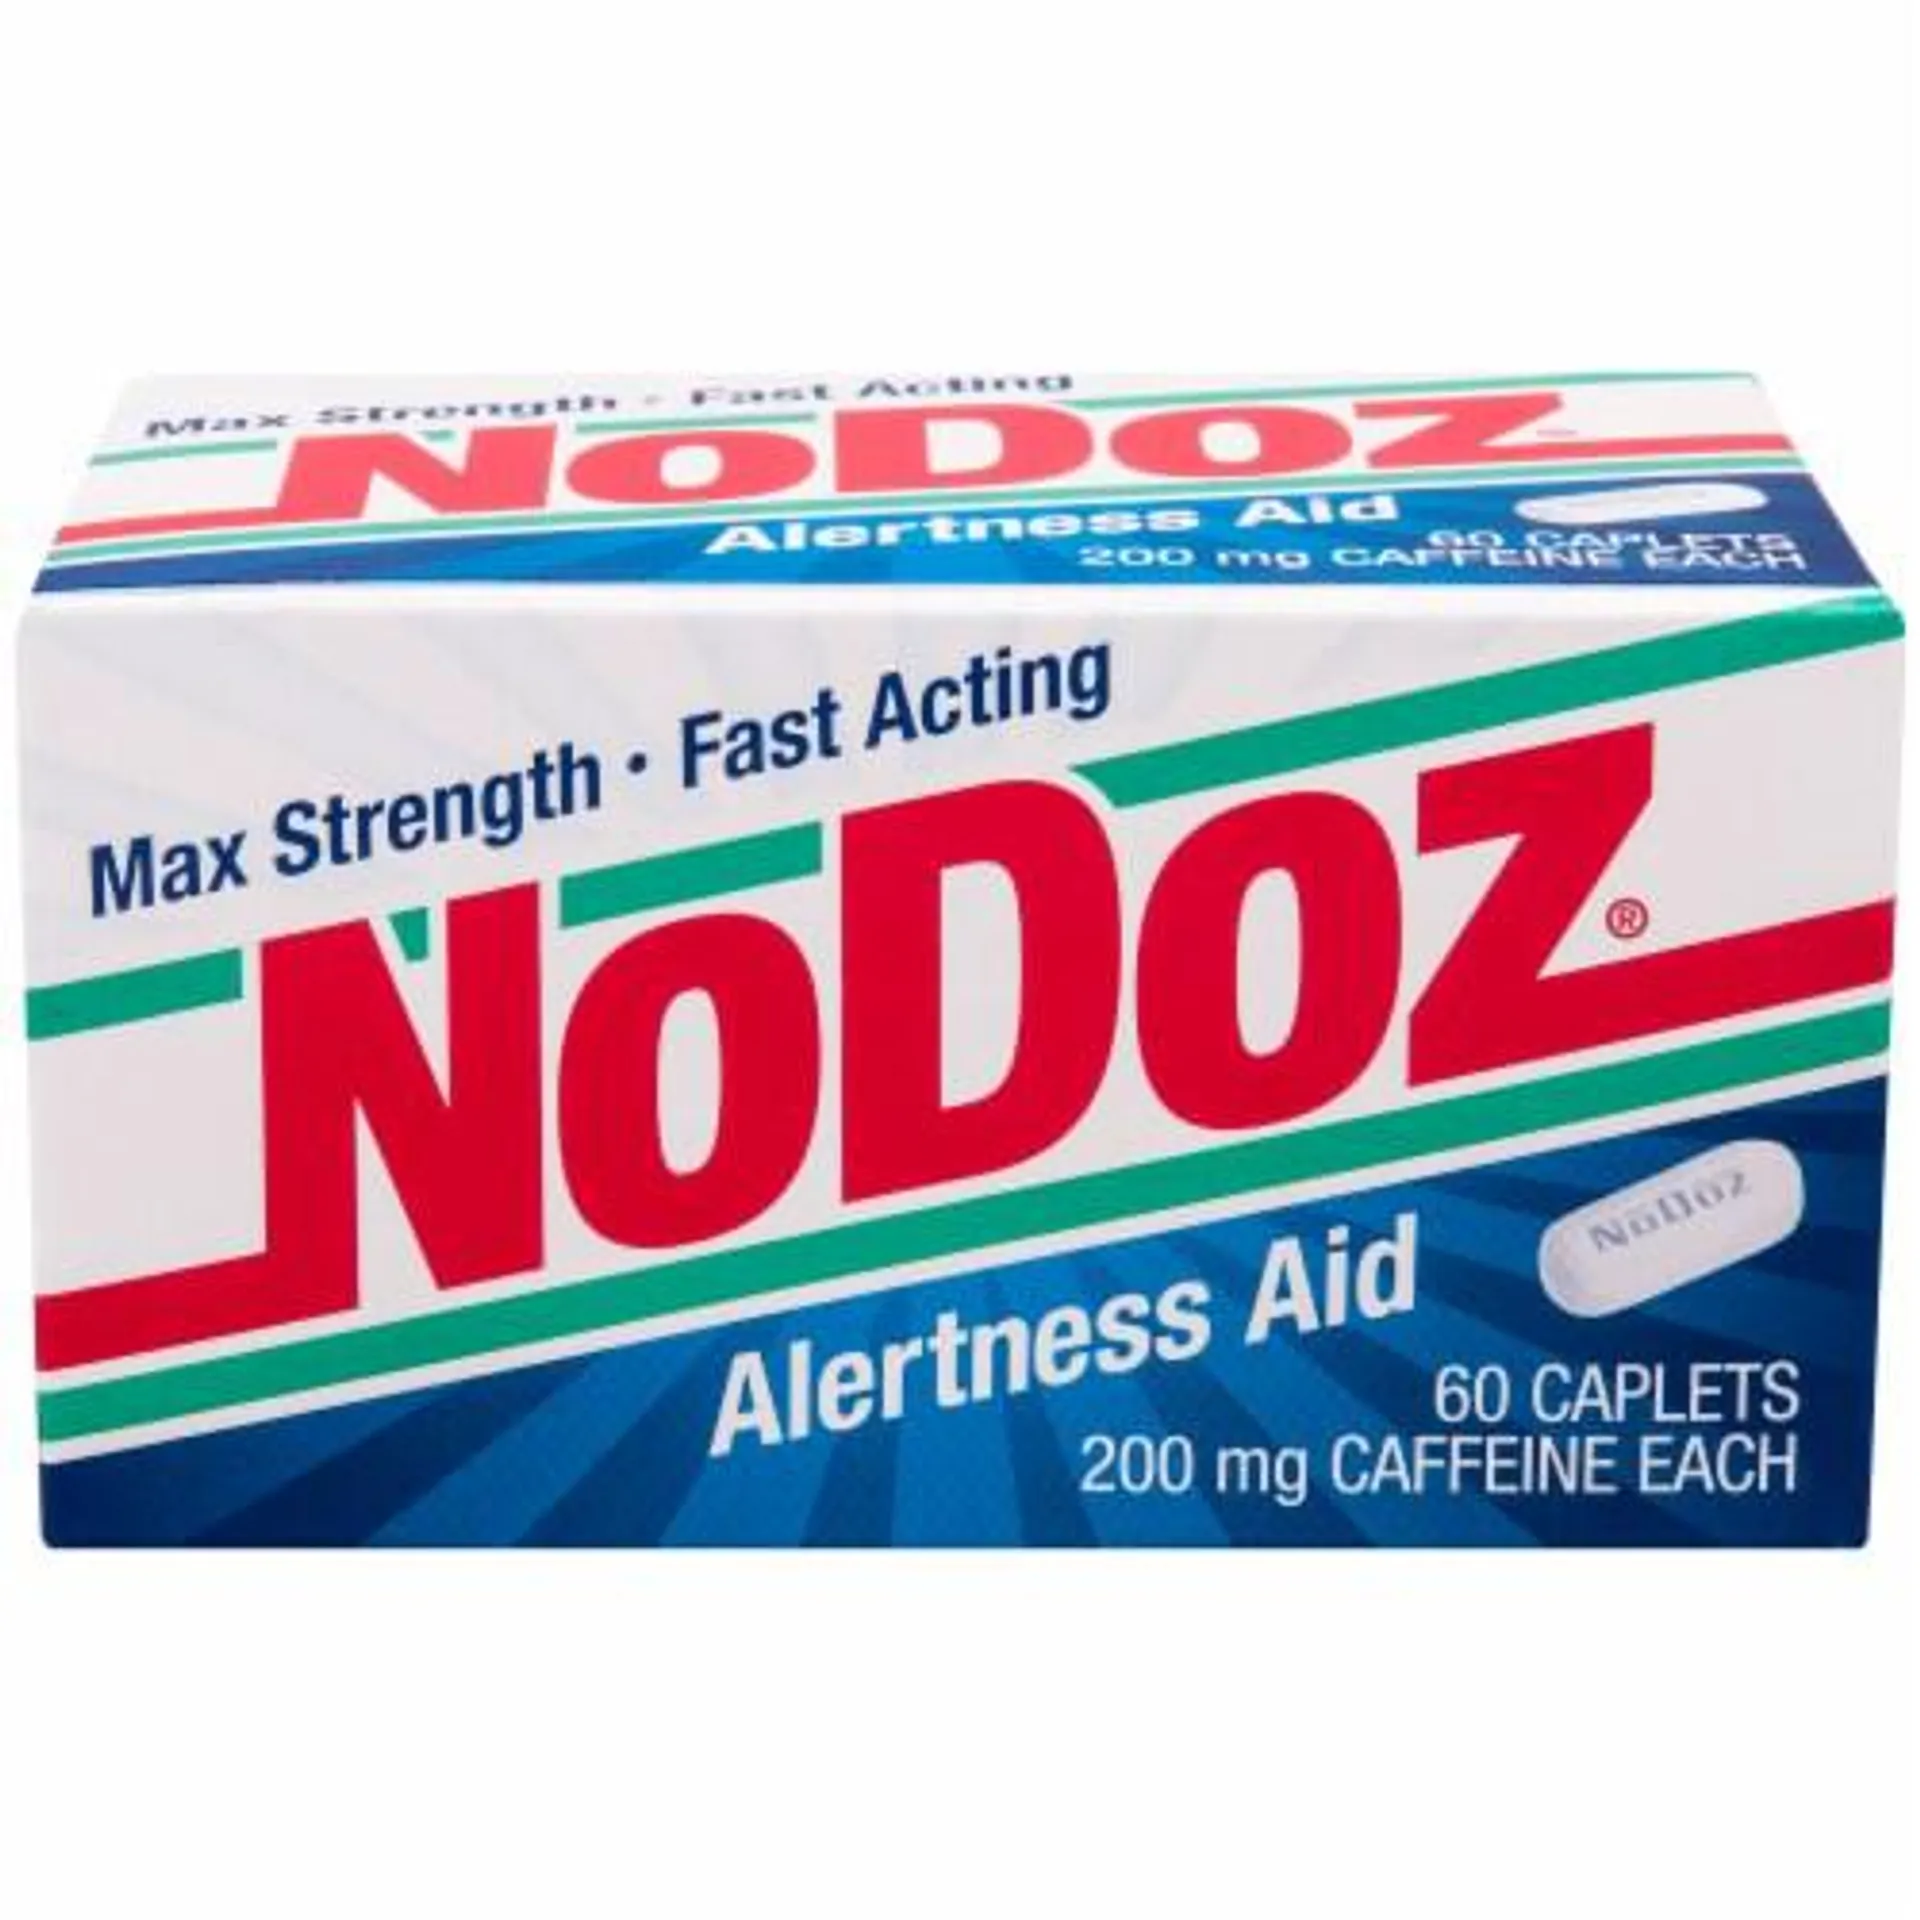 NoDoz Alertness Aid Extra Strength Fast Acting Caplets